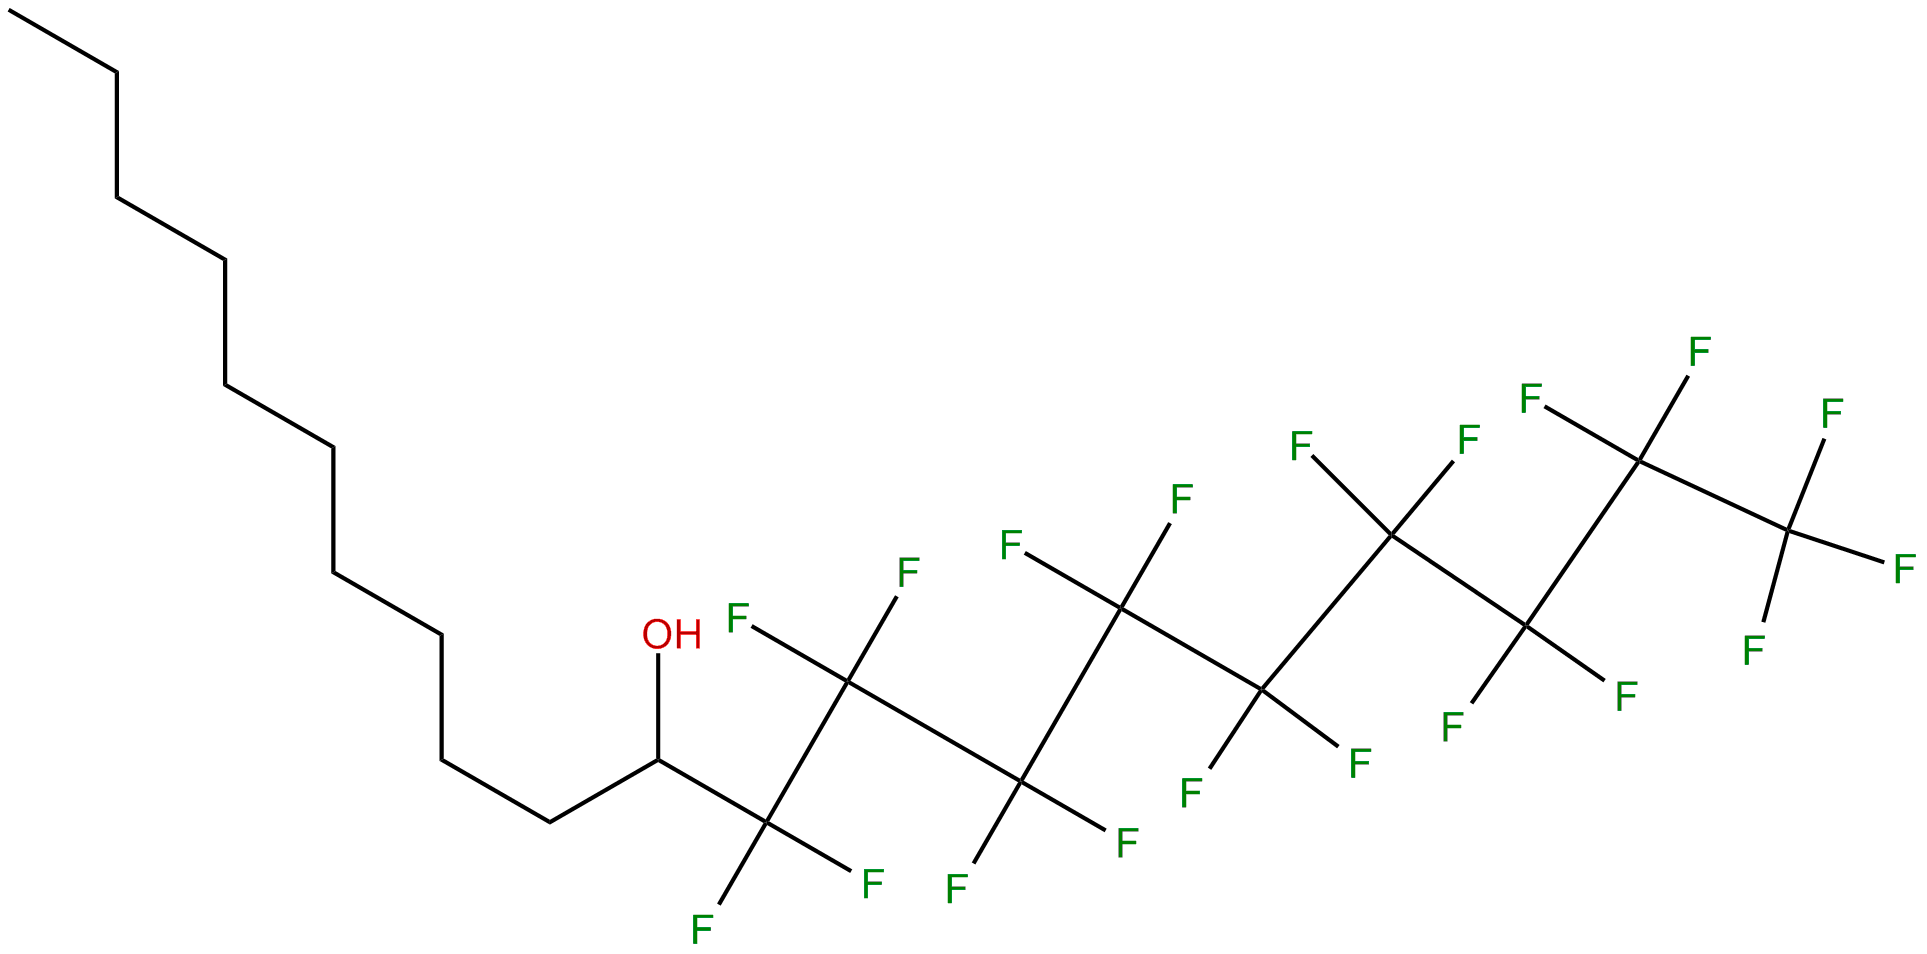 Image of 1,1,1,2,2,3,3,4,4,5,5,6,6,7,7,8,8,9,9-nonadecafluoro-10-eicosanol